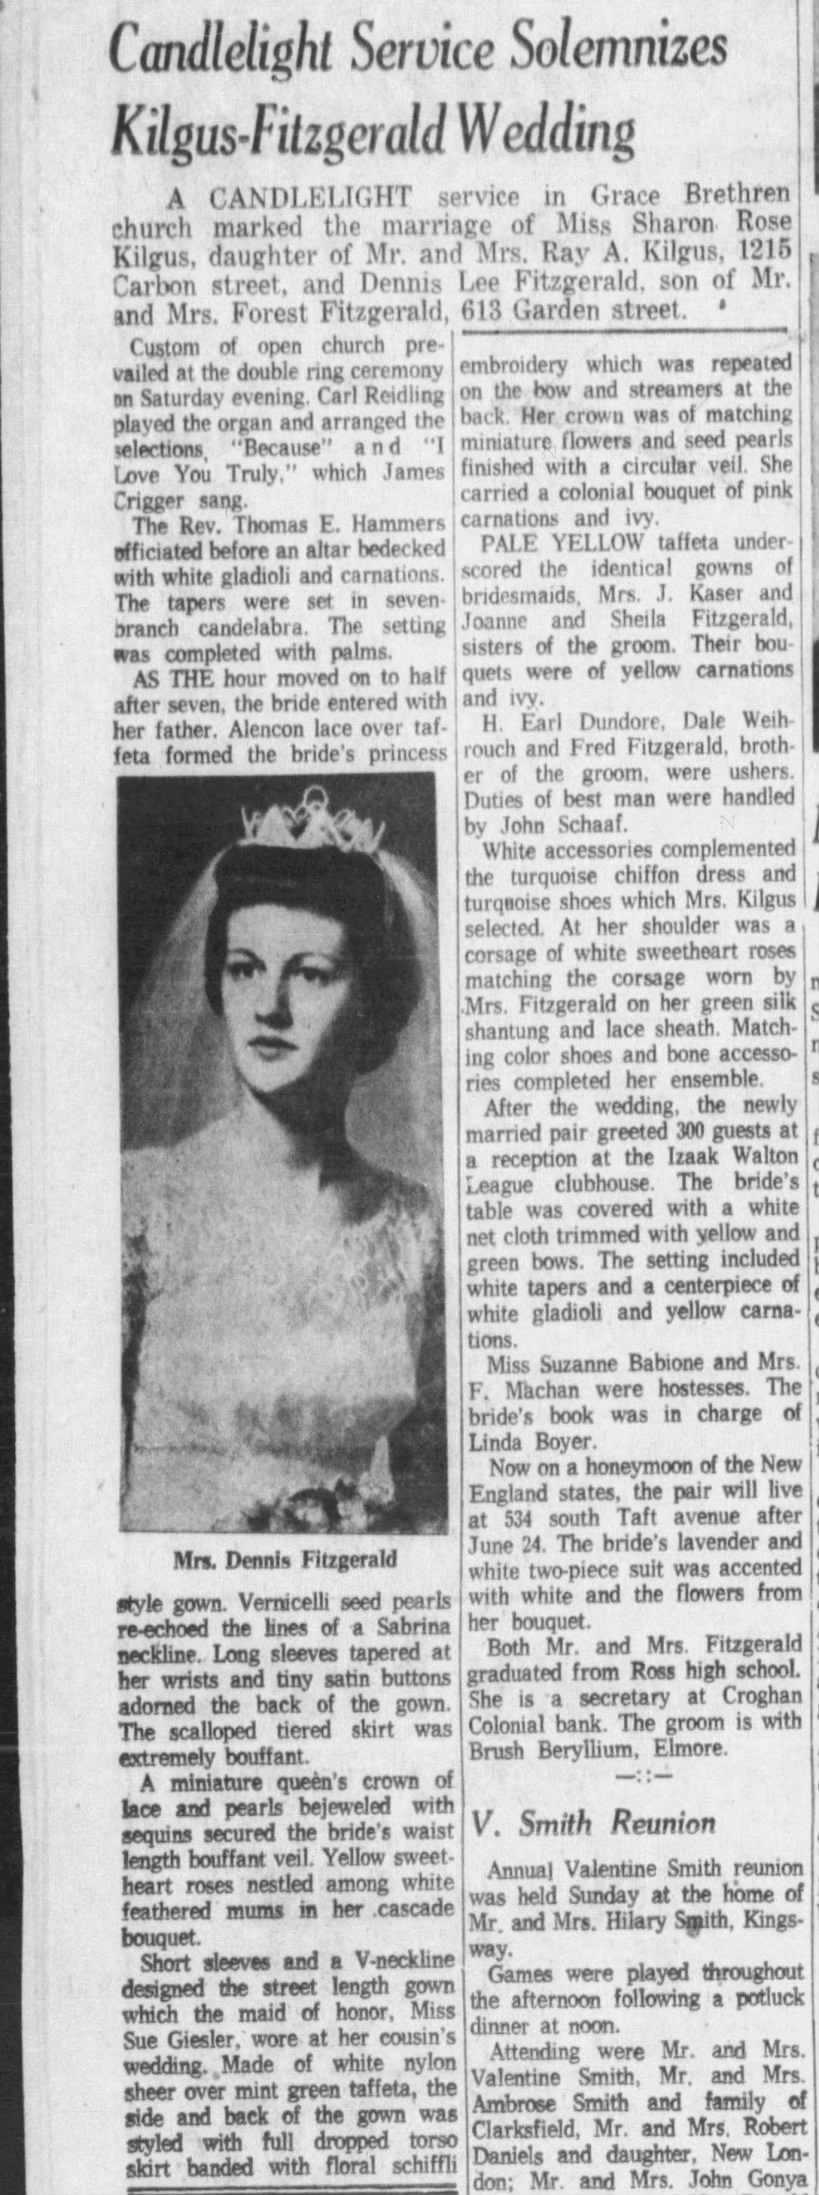 DENNIS FITZGERALD MARRIAGE 19 JUNE 1961 FREMONT,OHIO